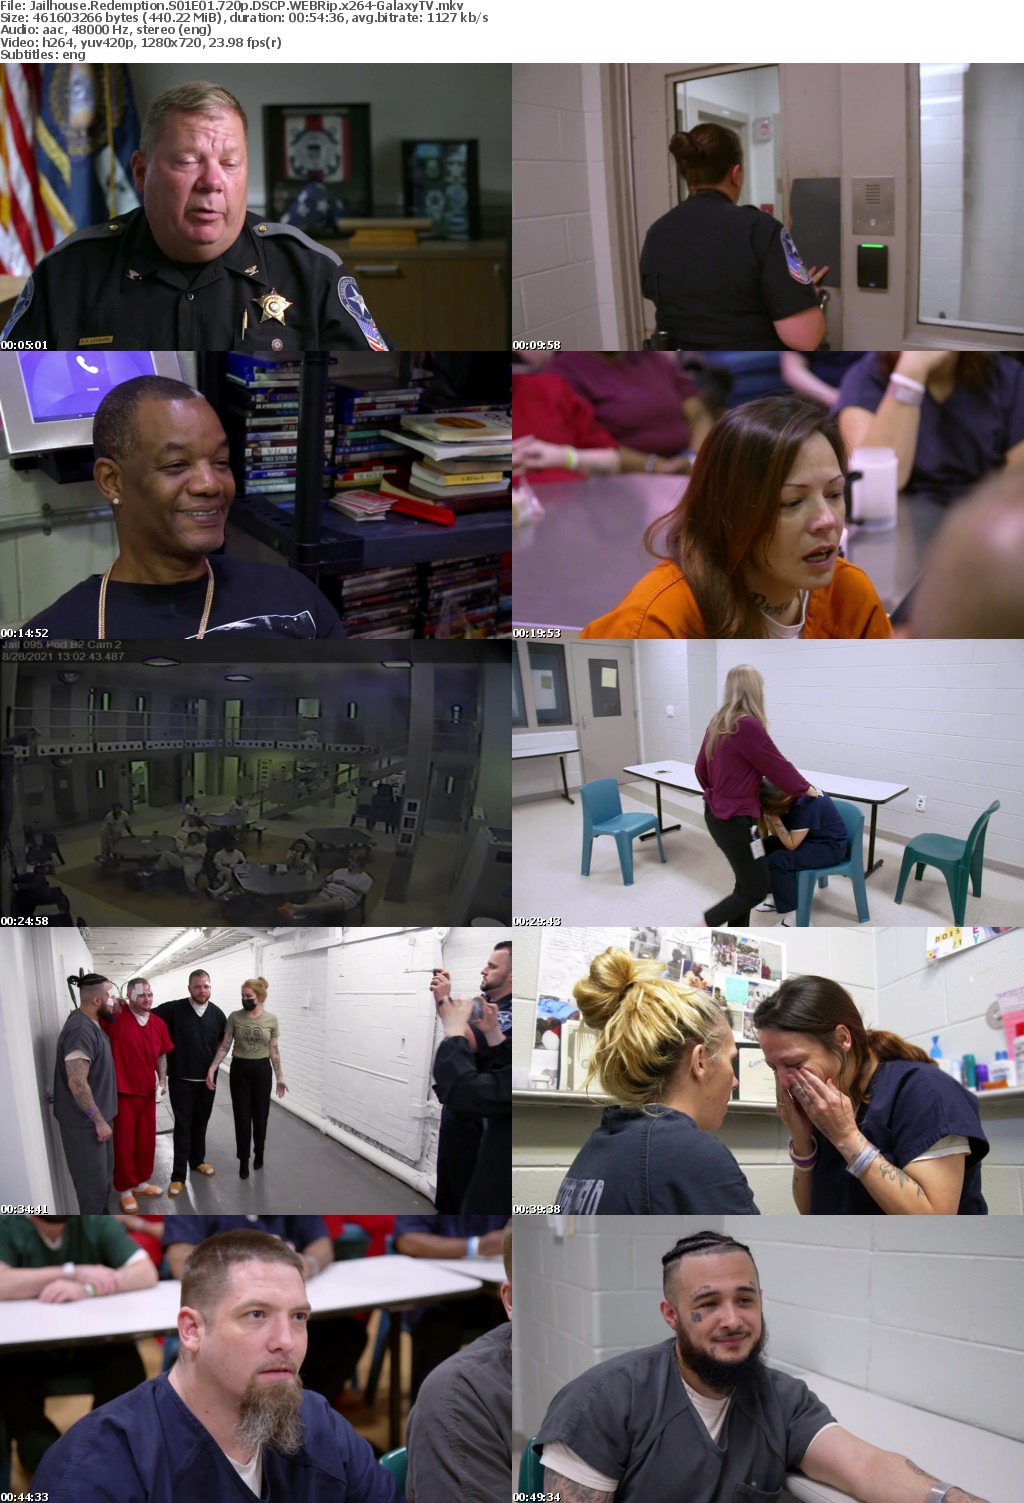 Jailhouse Redemption S01 COMPLETE 720p DSCP WEBRip x264-GalaxyTV